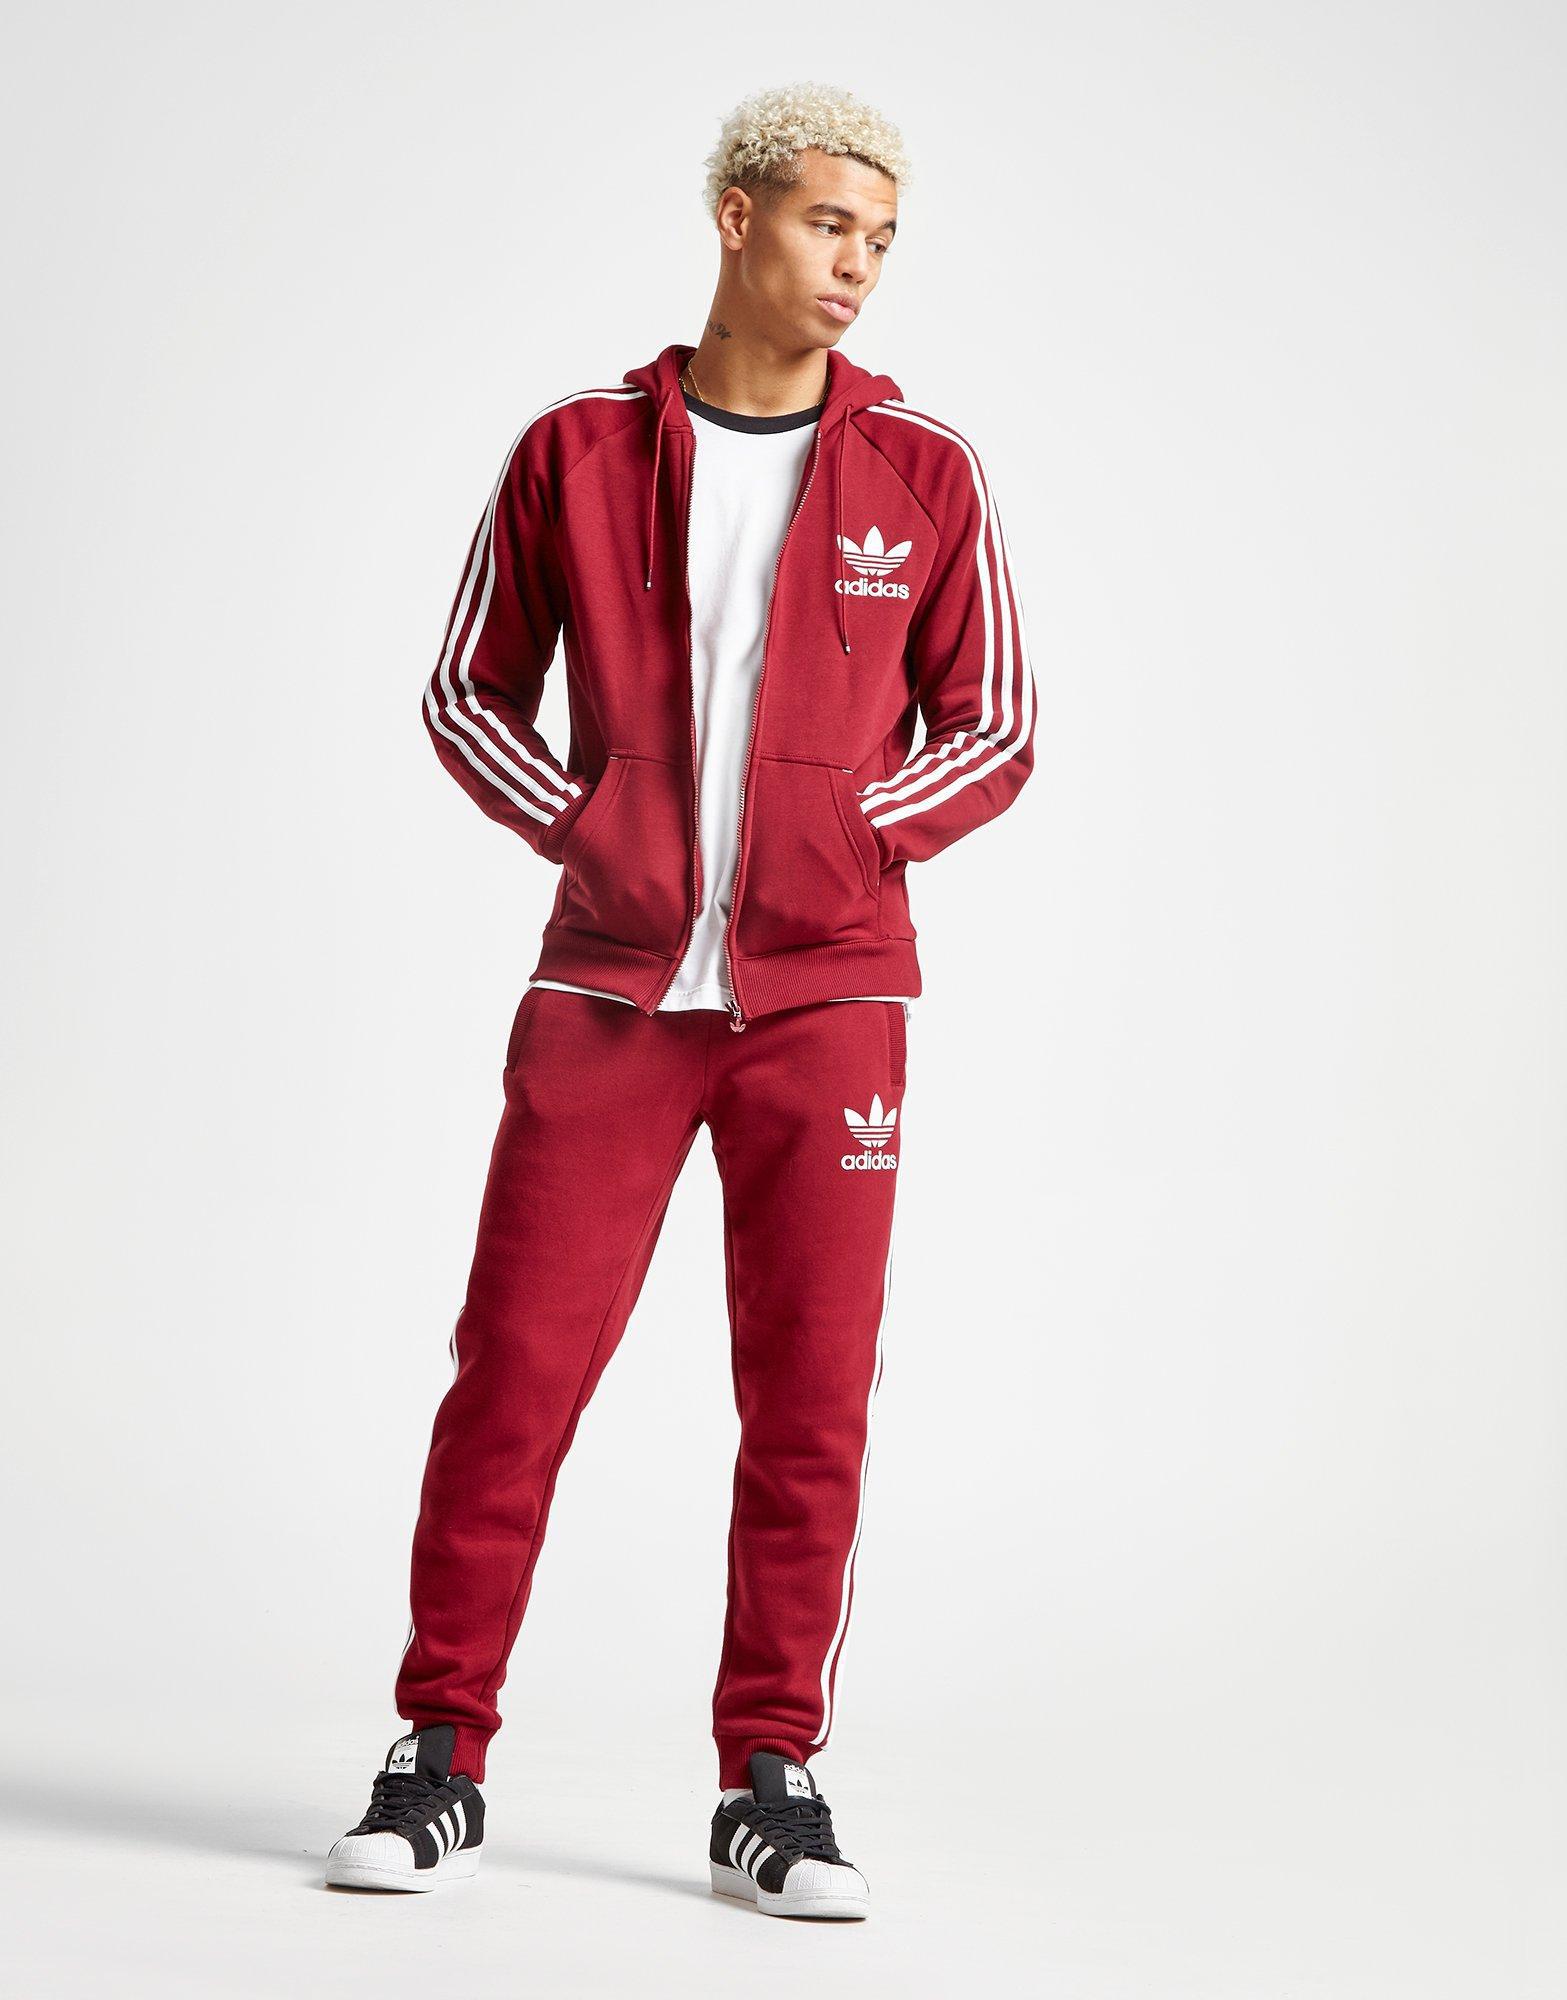 adidas Originals California Full Zip Hoodie in Red for Men - Lyst